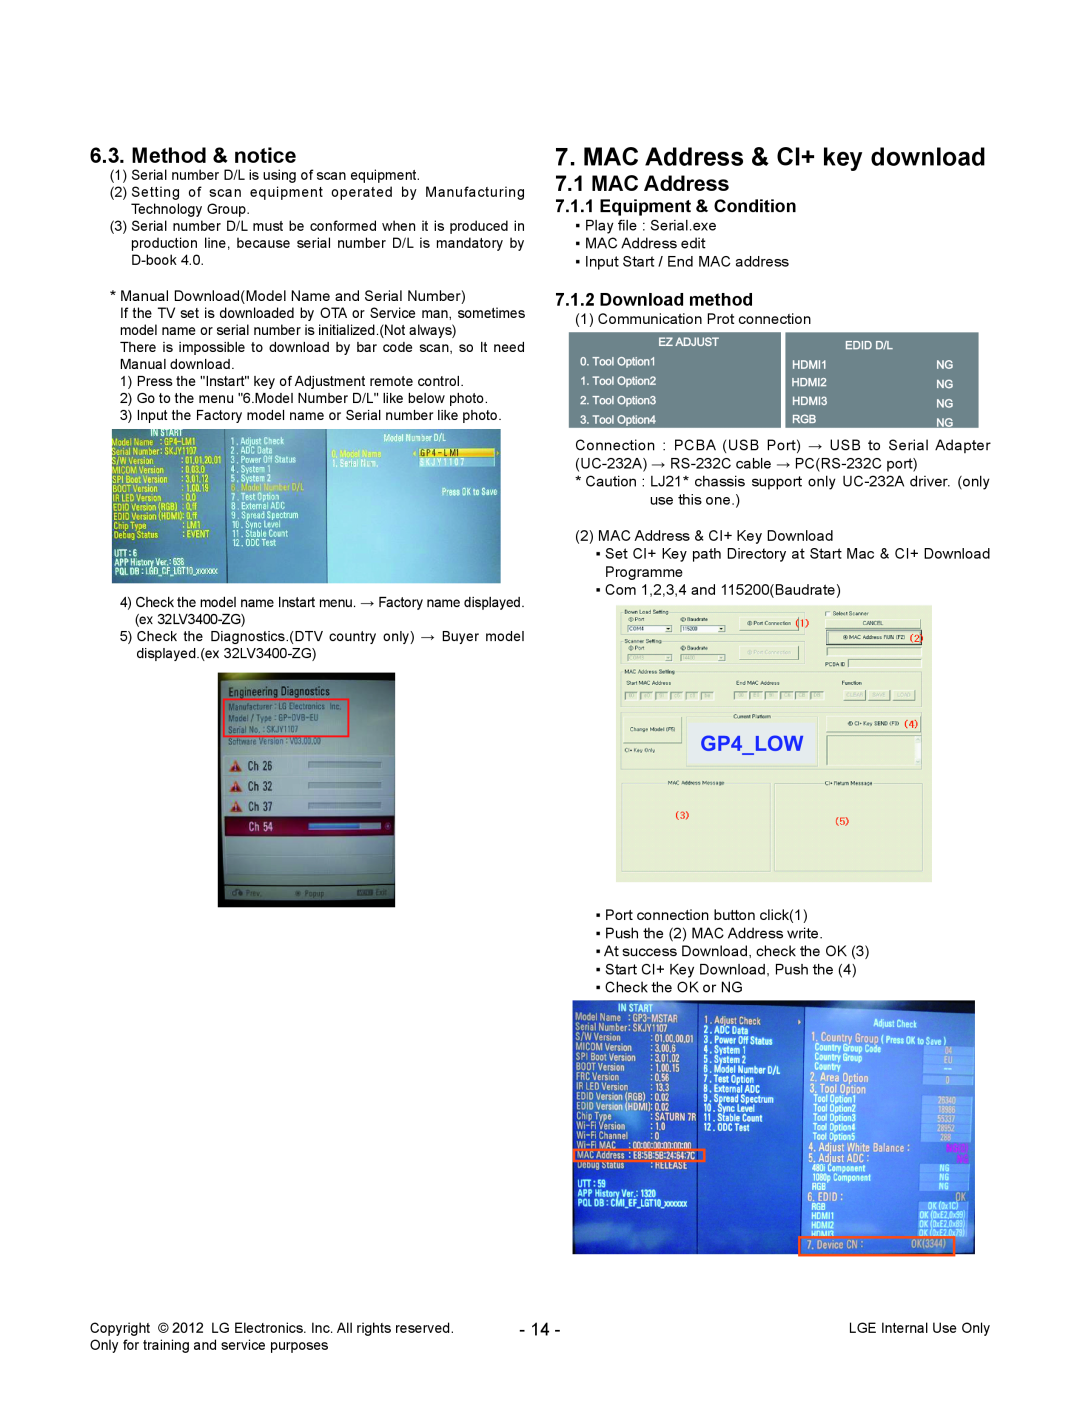 LG Electronics 340T, 340S, 3450 service manual MAC Address & CI+ key download, Method & notice, GP4LOW 